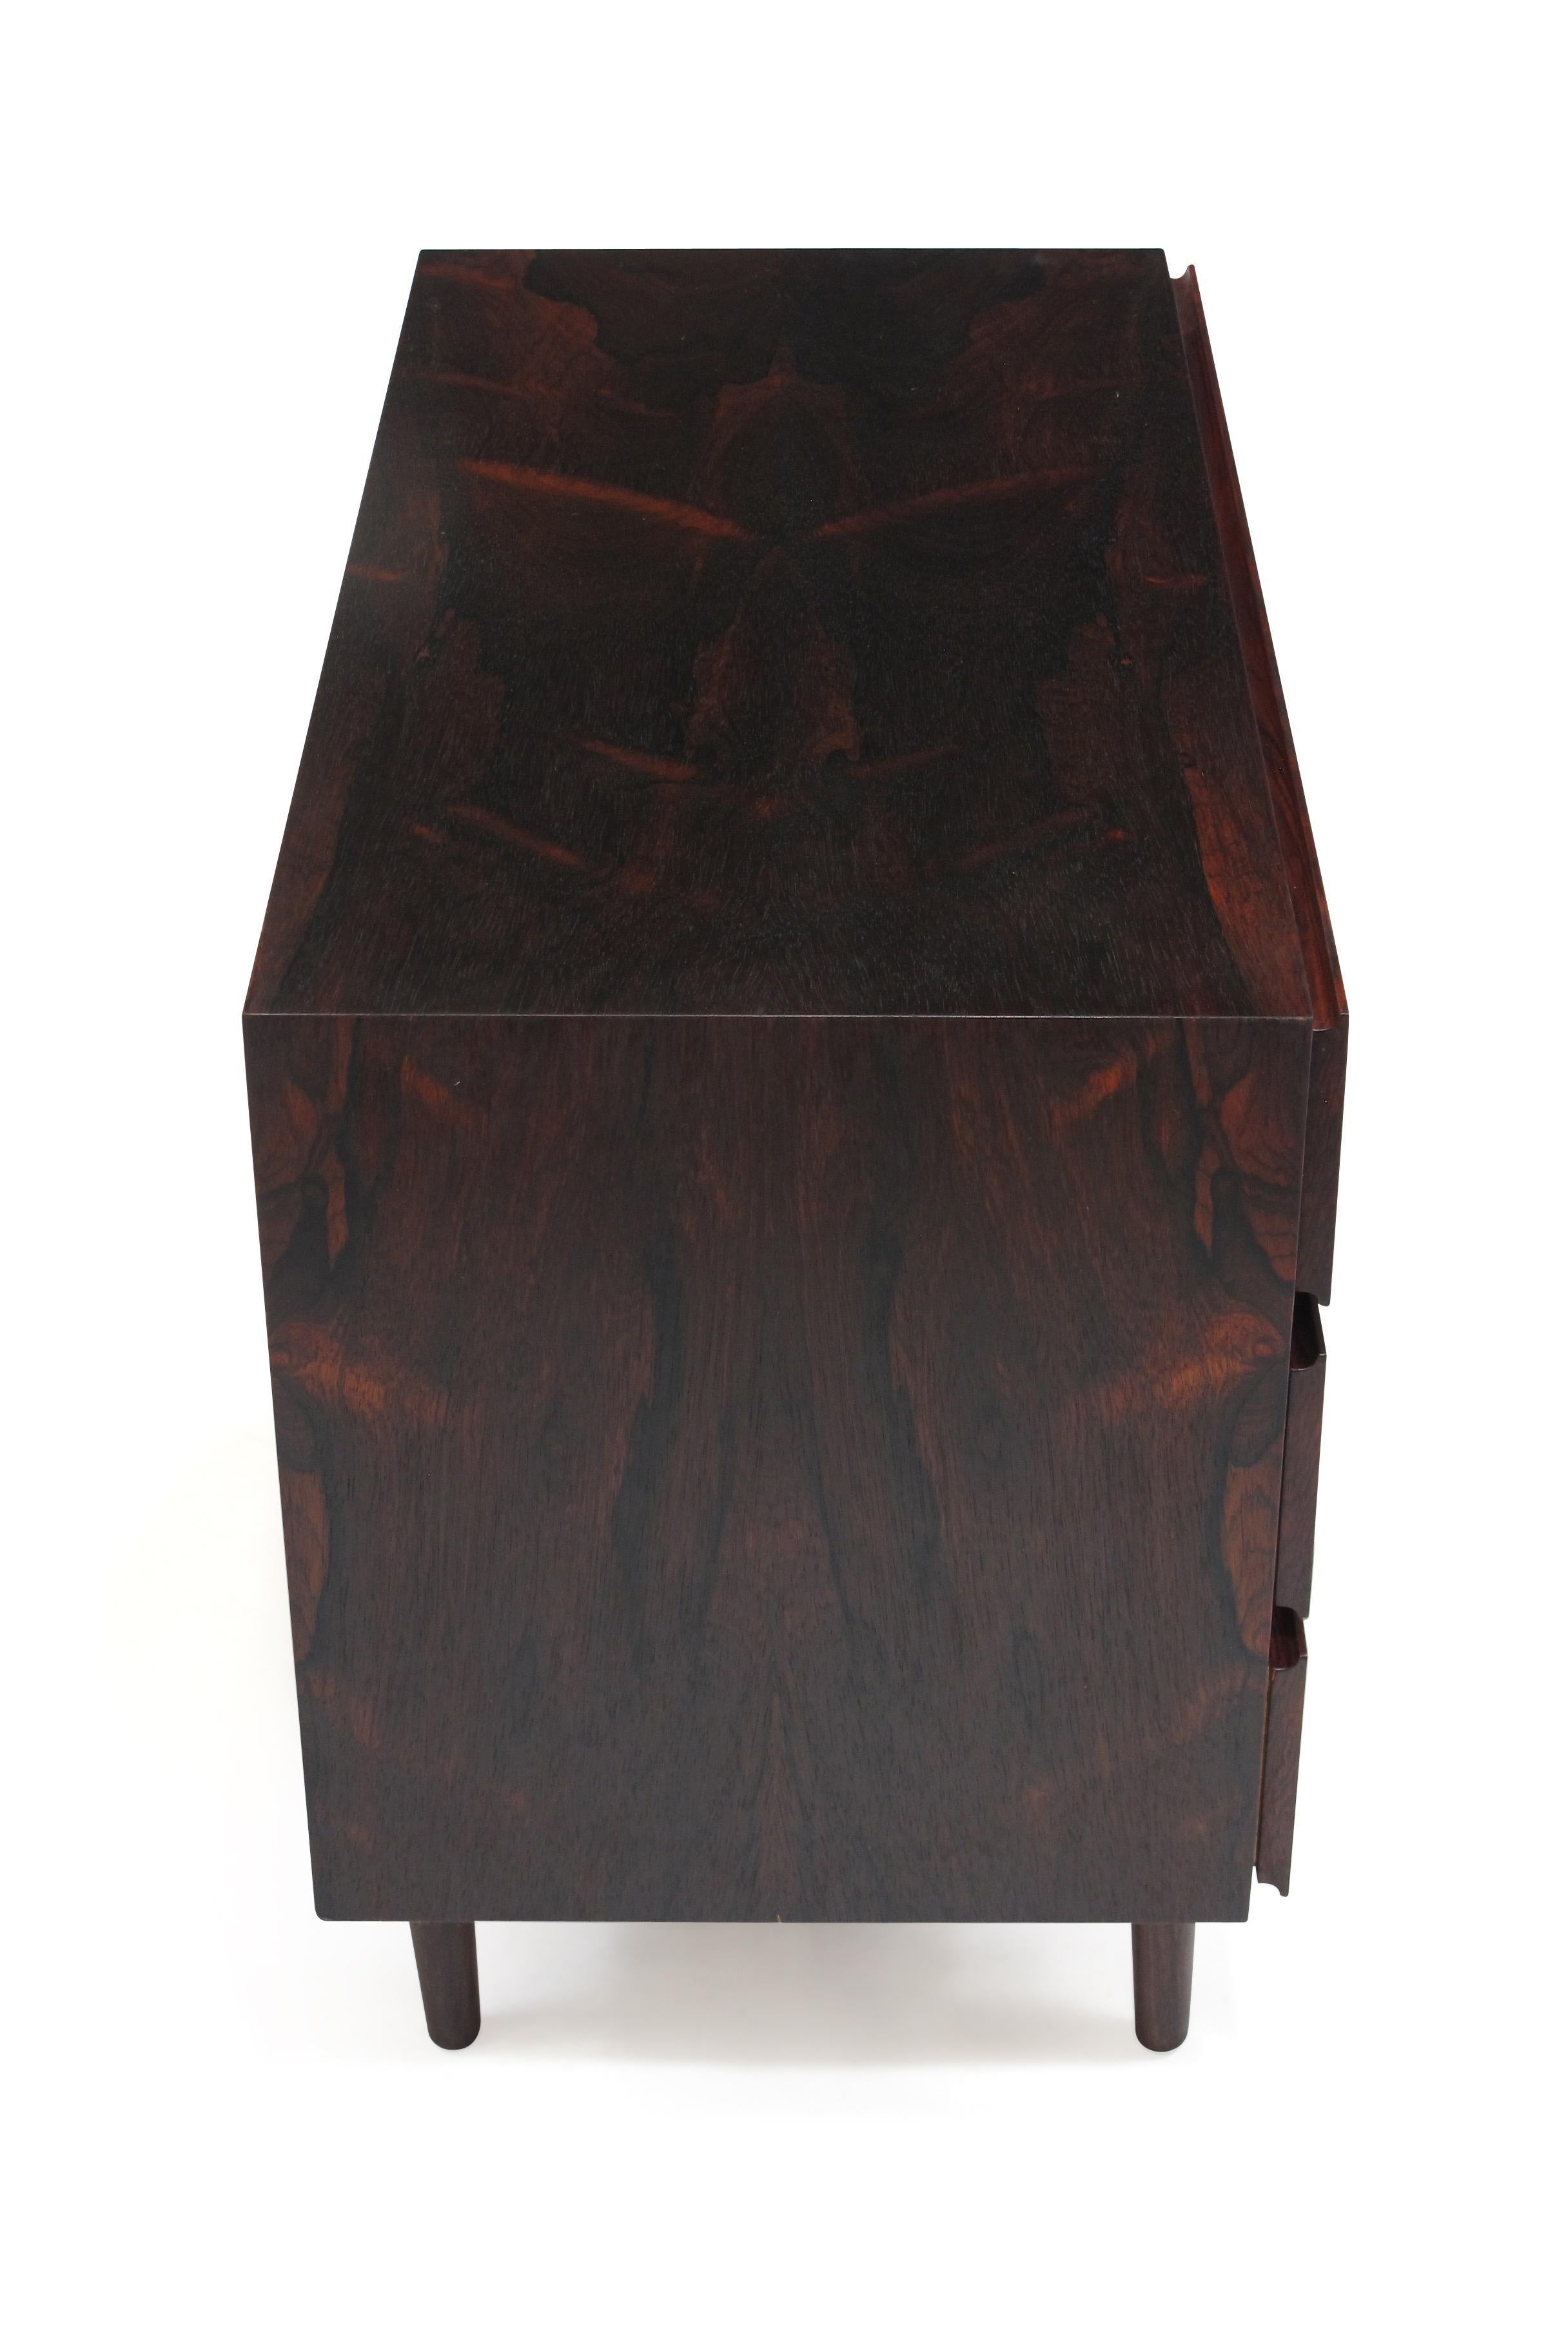 Midcentury Danish Rosewood Dresser In Excellent Condition For Sale In Oakland, CA